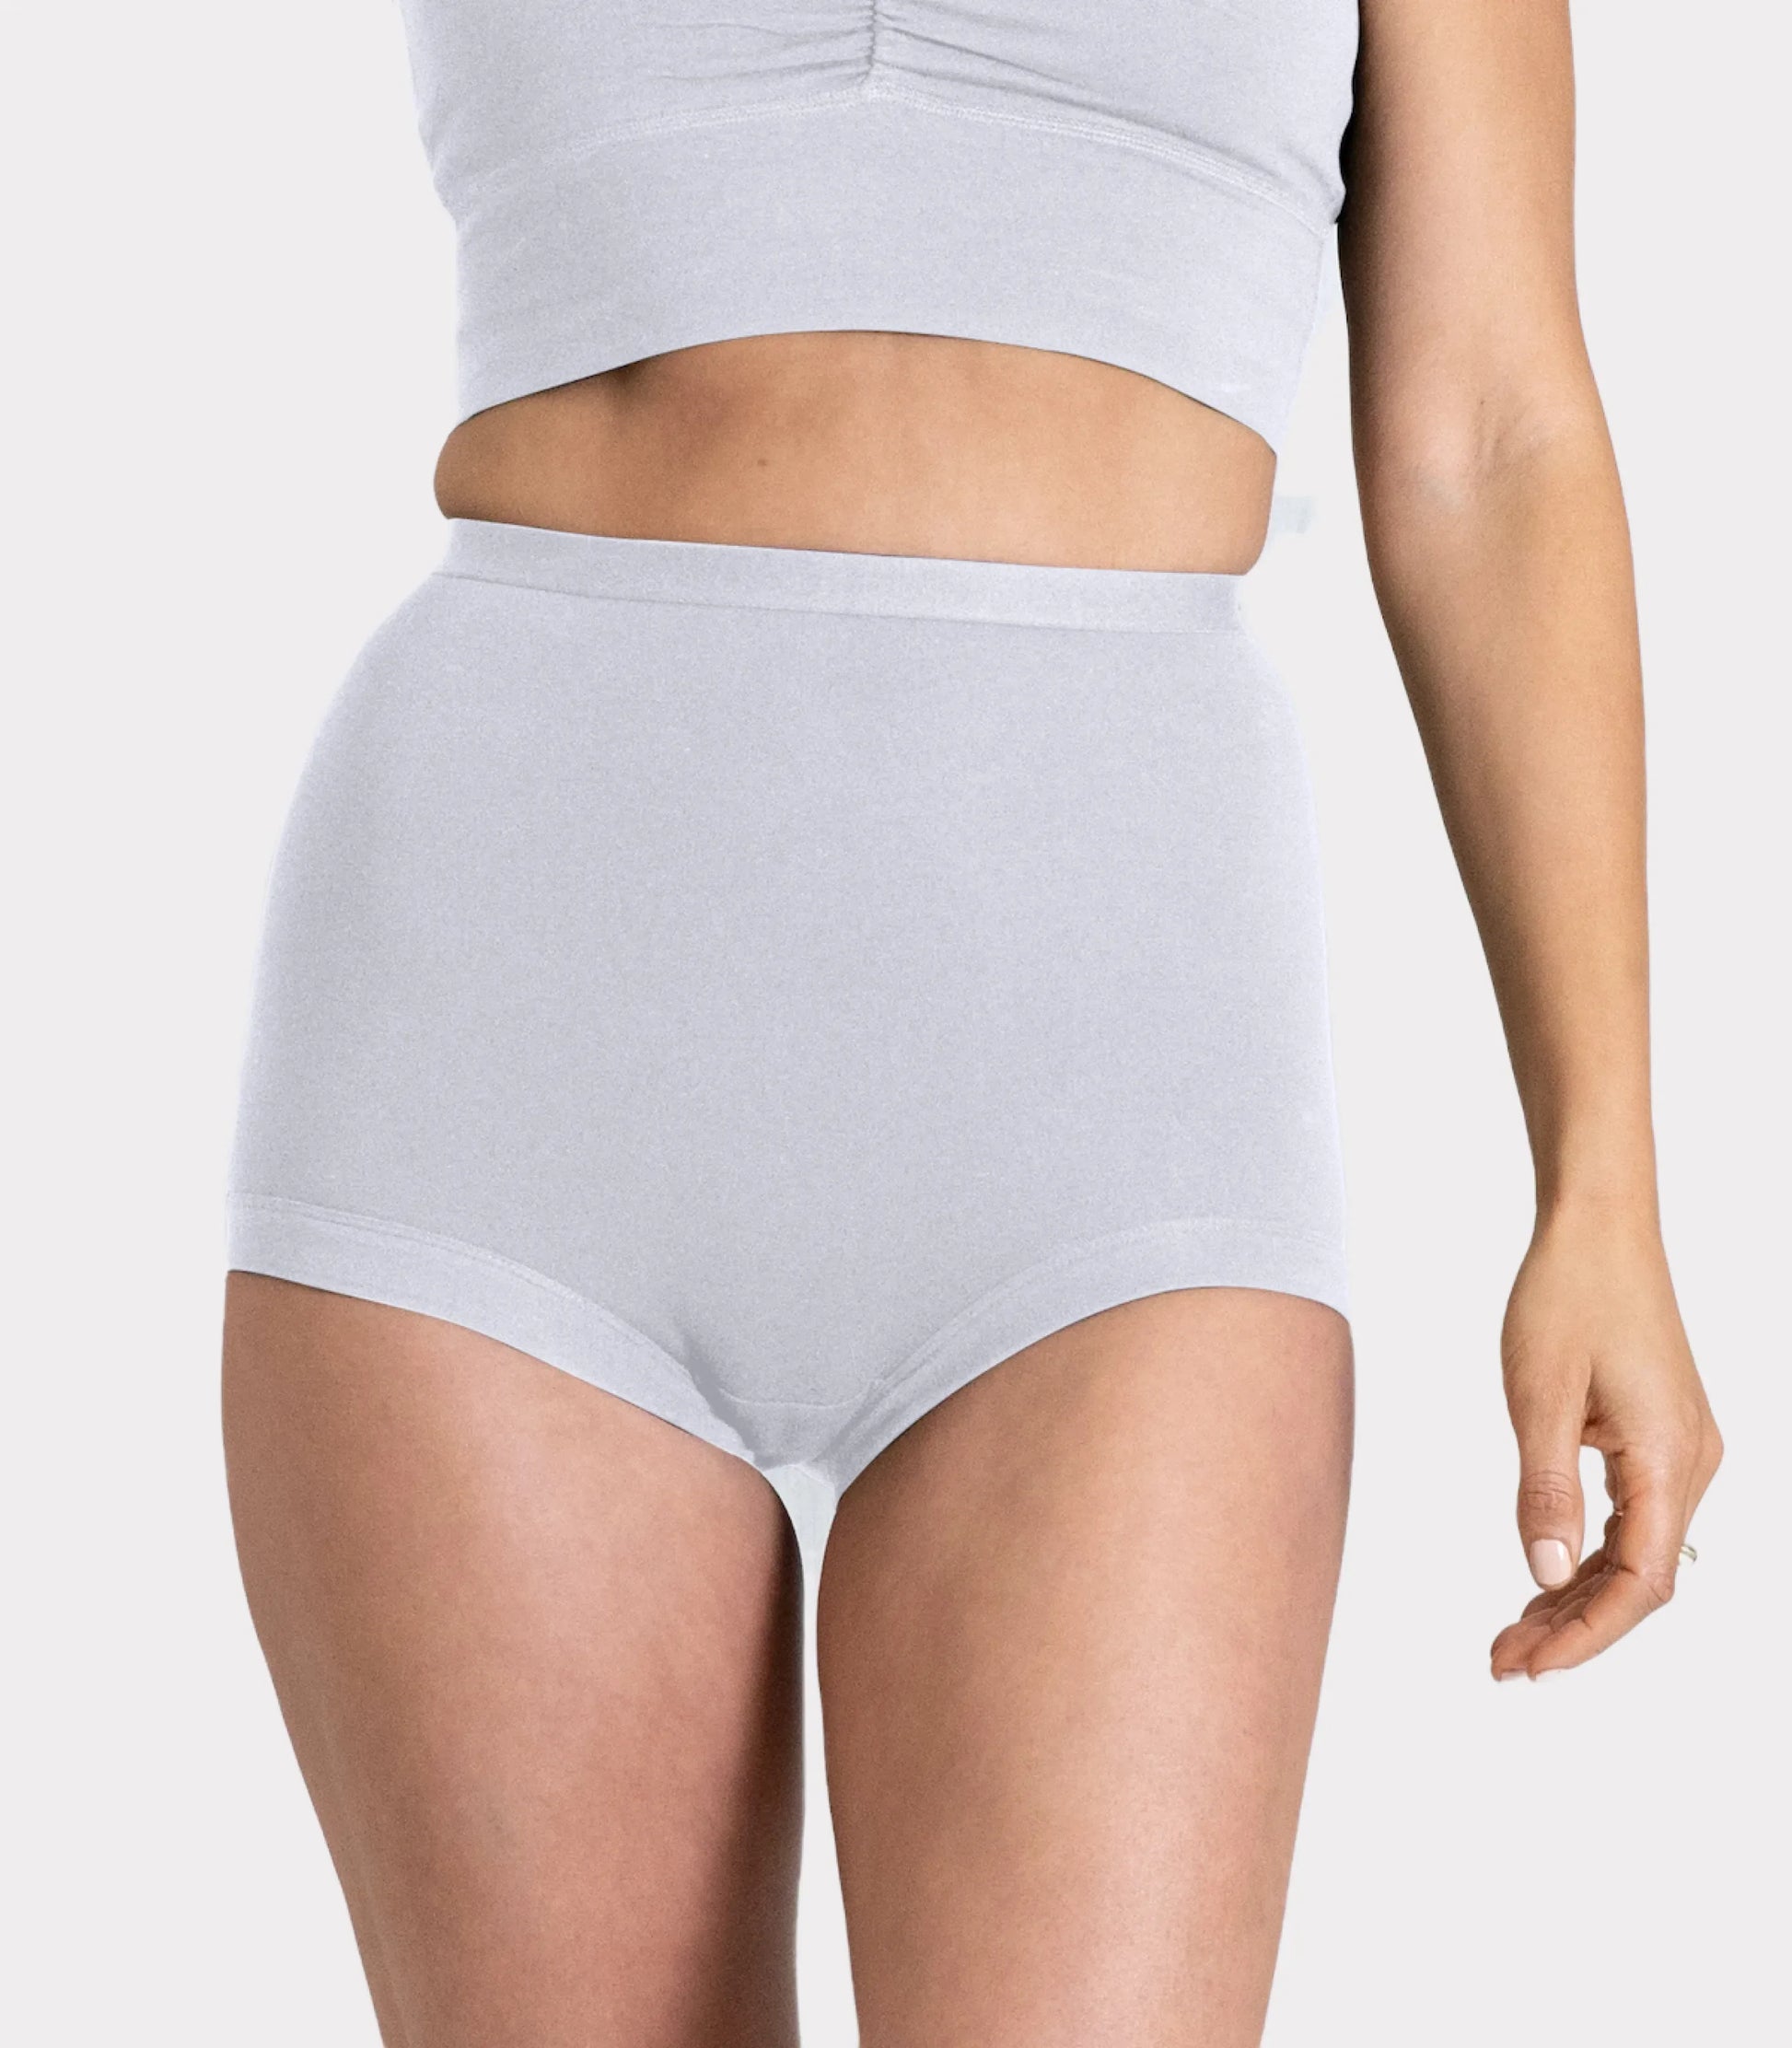 New in package! Women's Comfort Covered Cotton Brief Underwear, 6